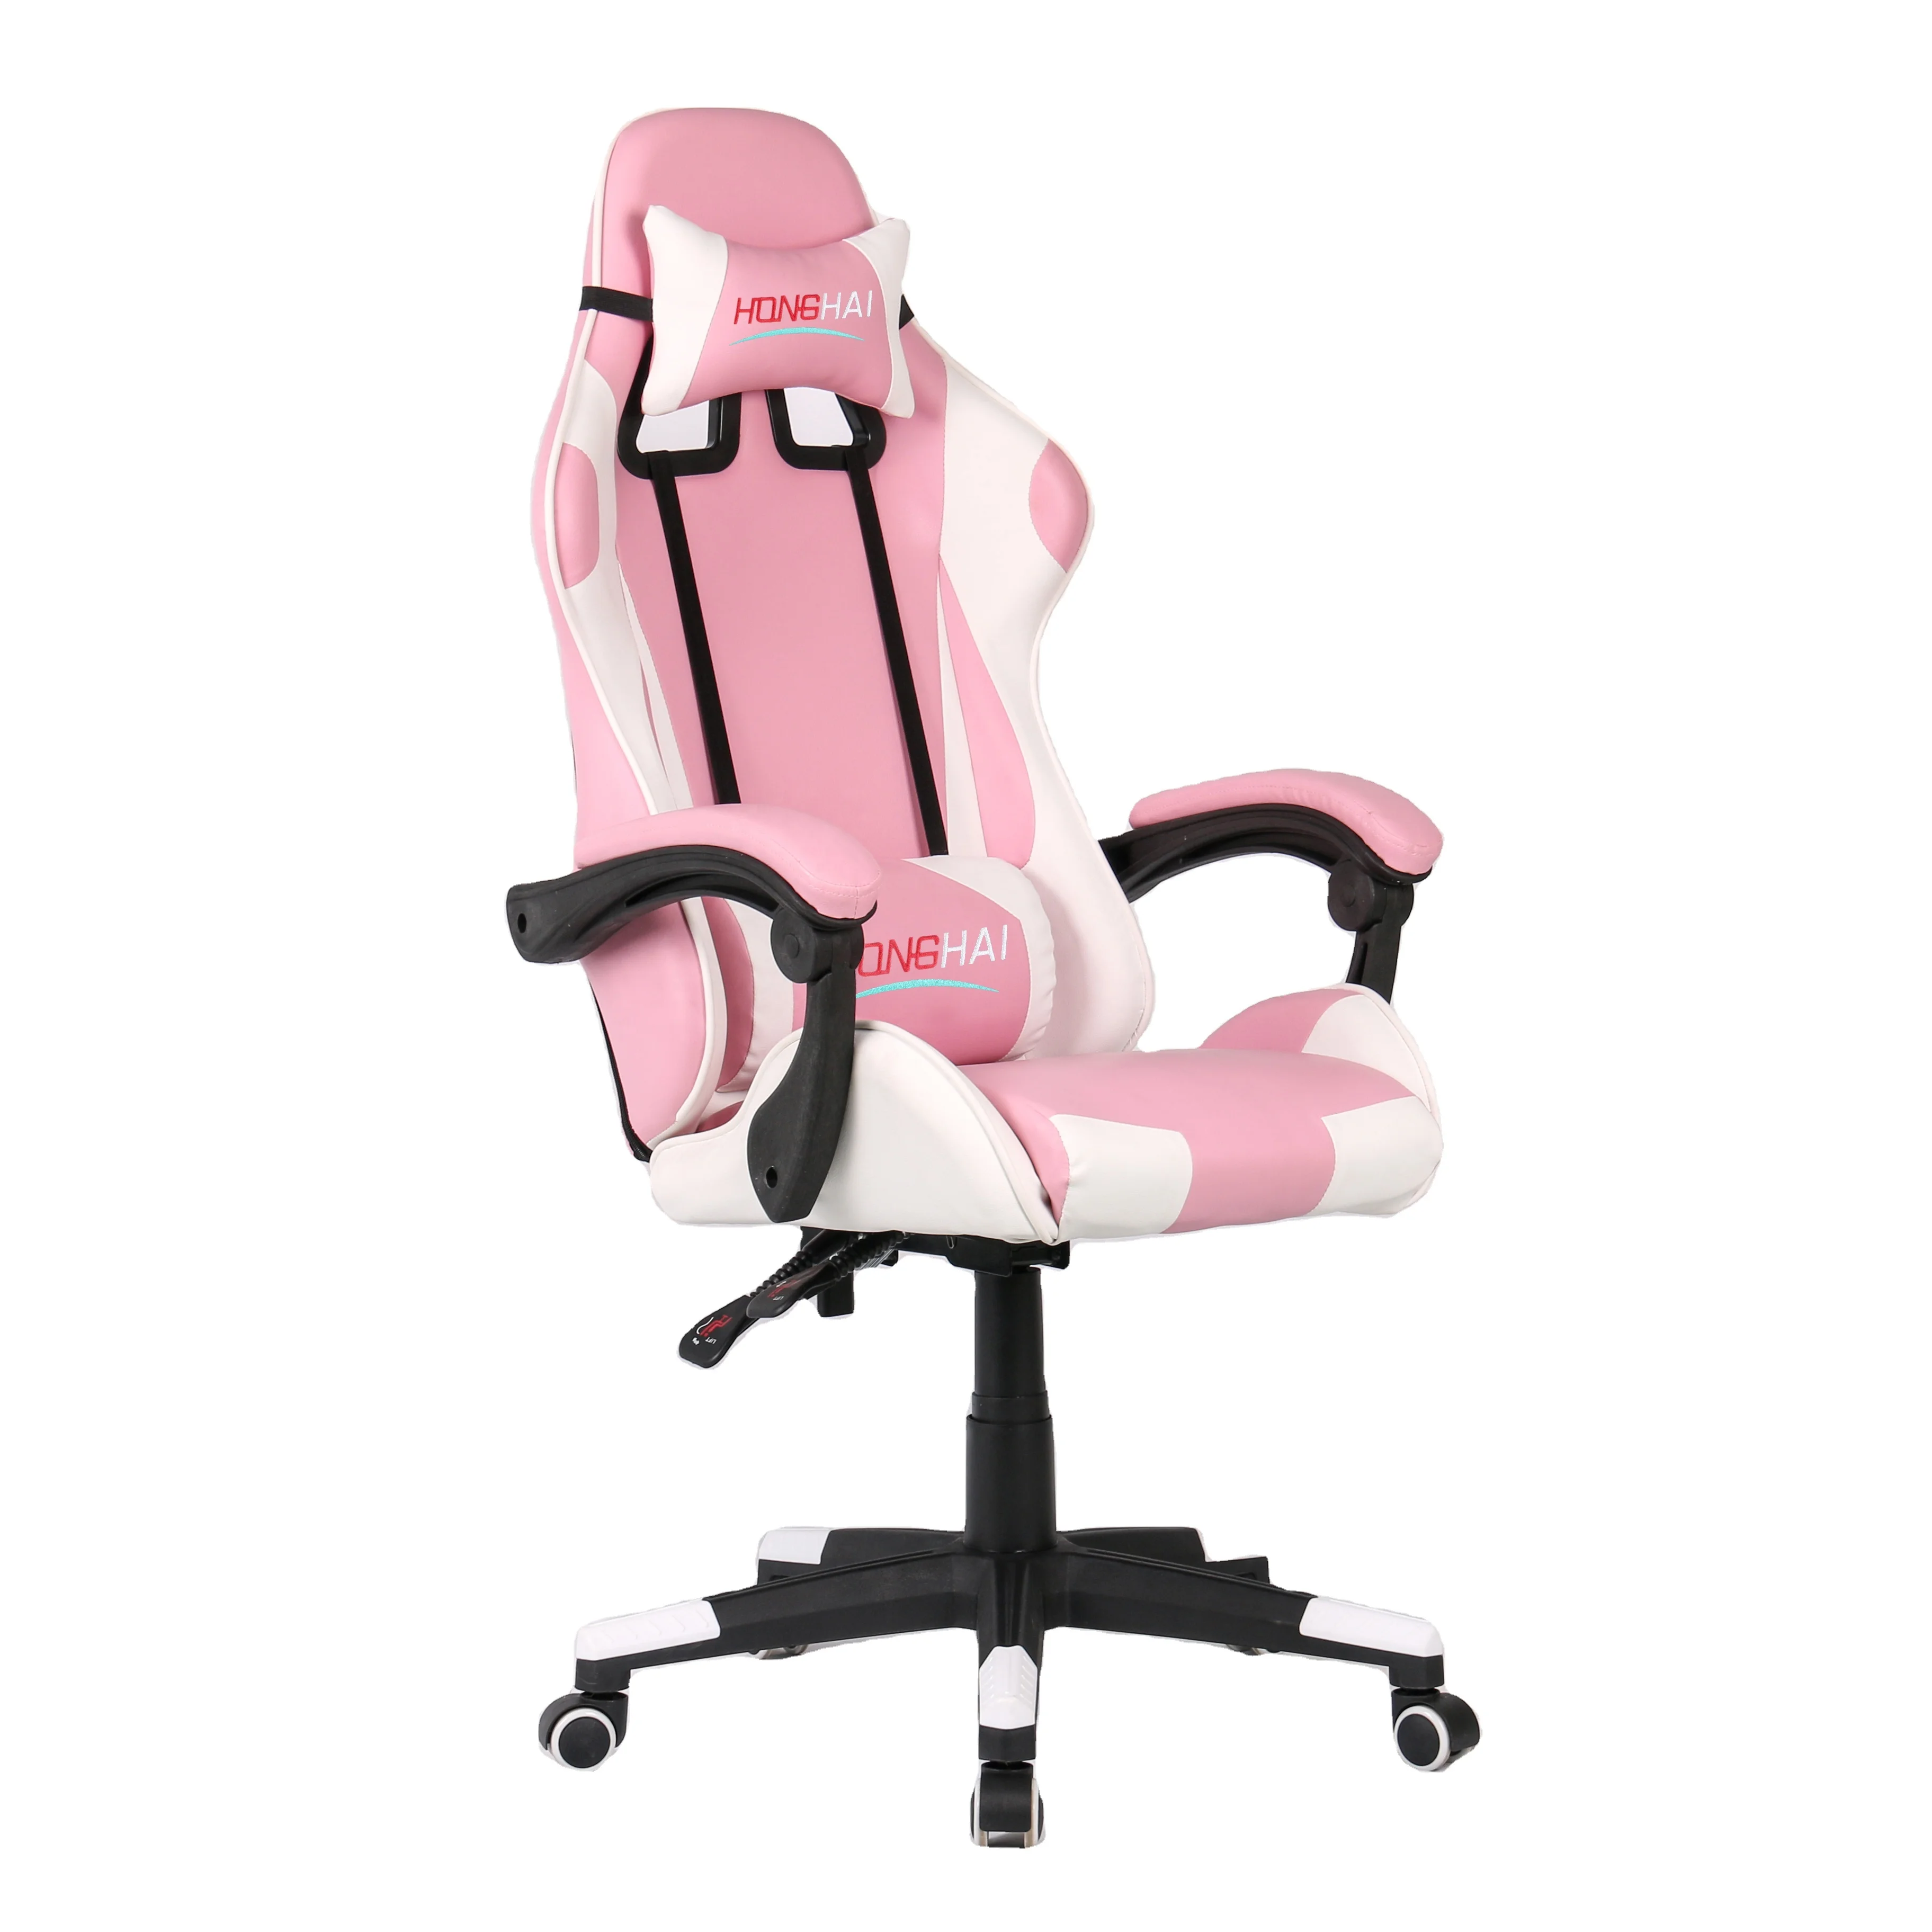 New High Back Racing Car Style Bucket Seat Office Pink Gaming Chair Buy High Back Racing Chair Pink Gaming Chair Gaming Chair Office Product On Alibaba Com